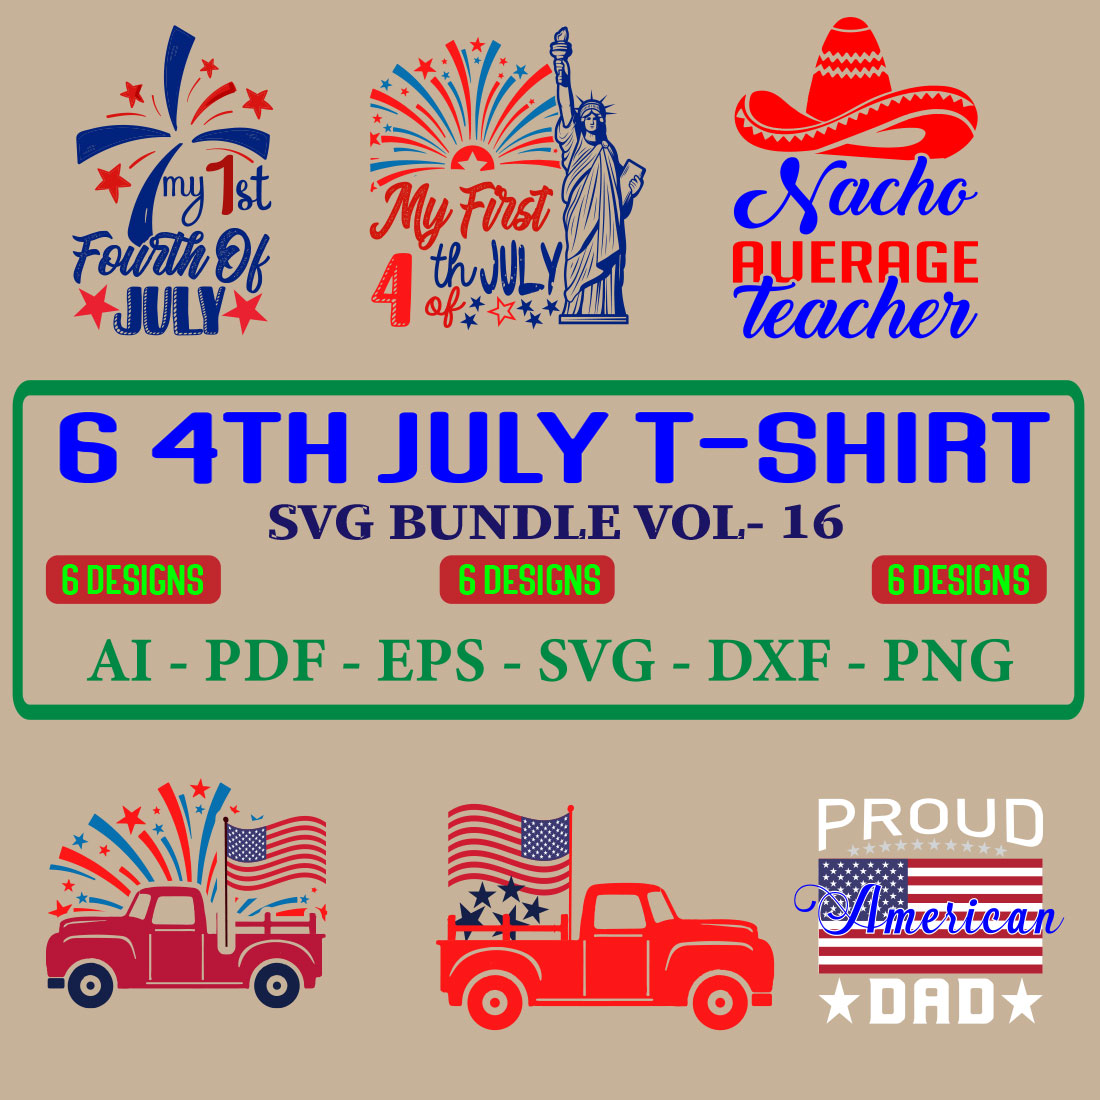 6 4th july T-shirt SVG Bundle Vol-16 cover image.